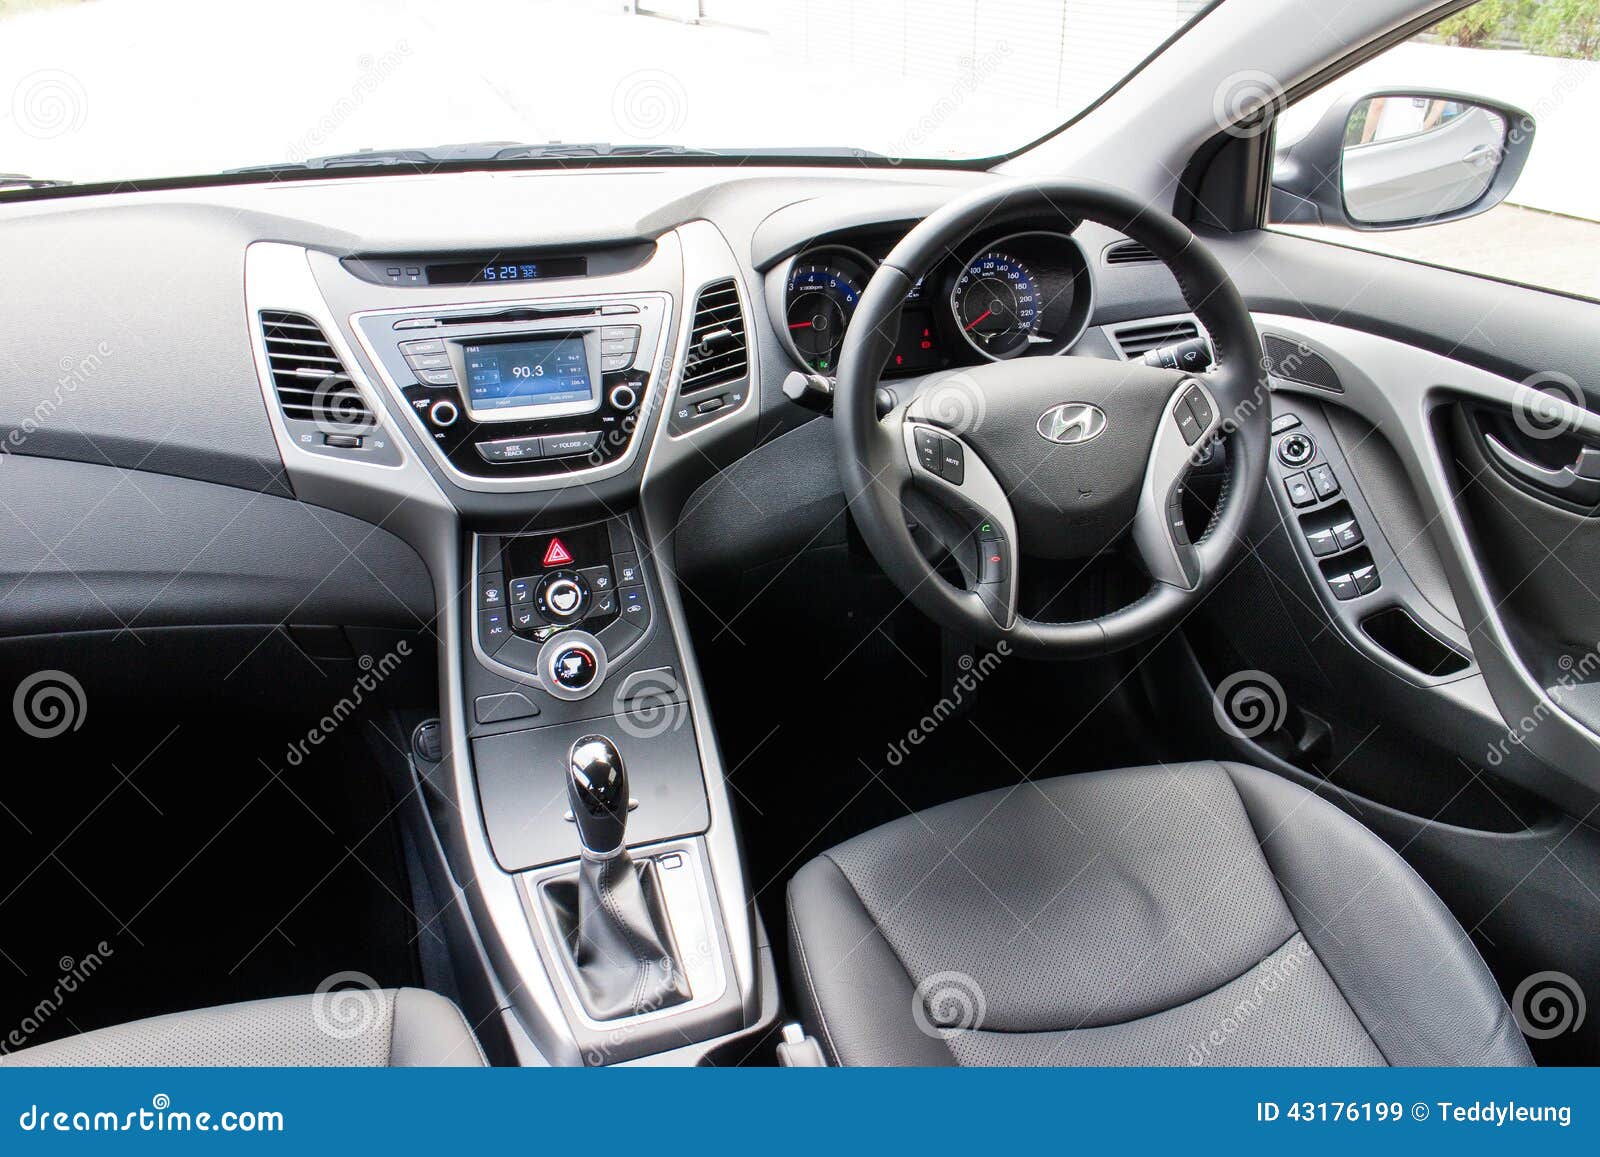 Hyundai Elantra 2014 Interior Editorial Stock Image  Image of vehicle  family 43176199